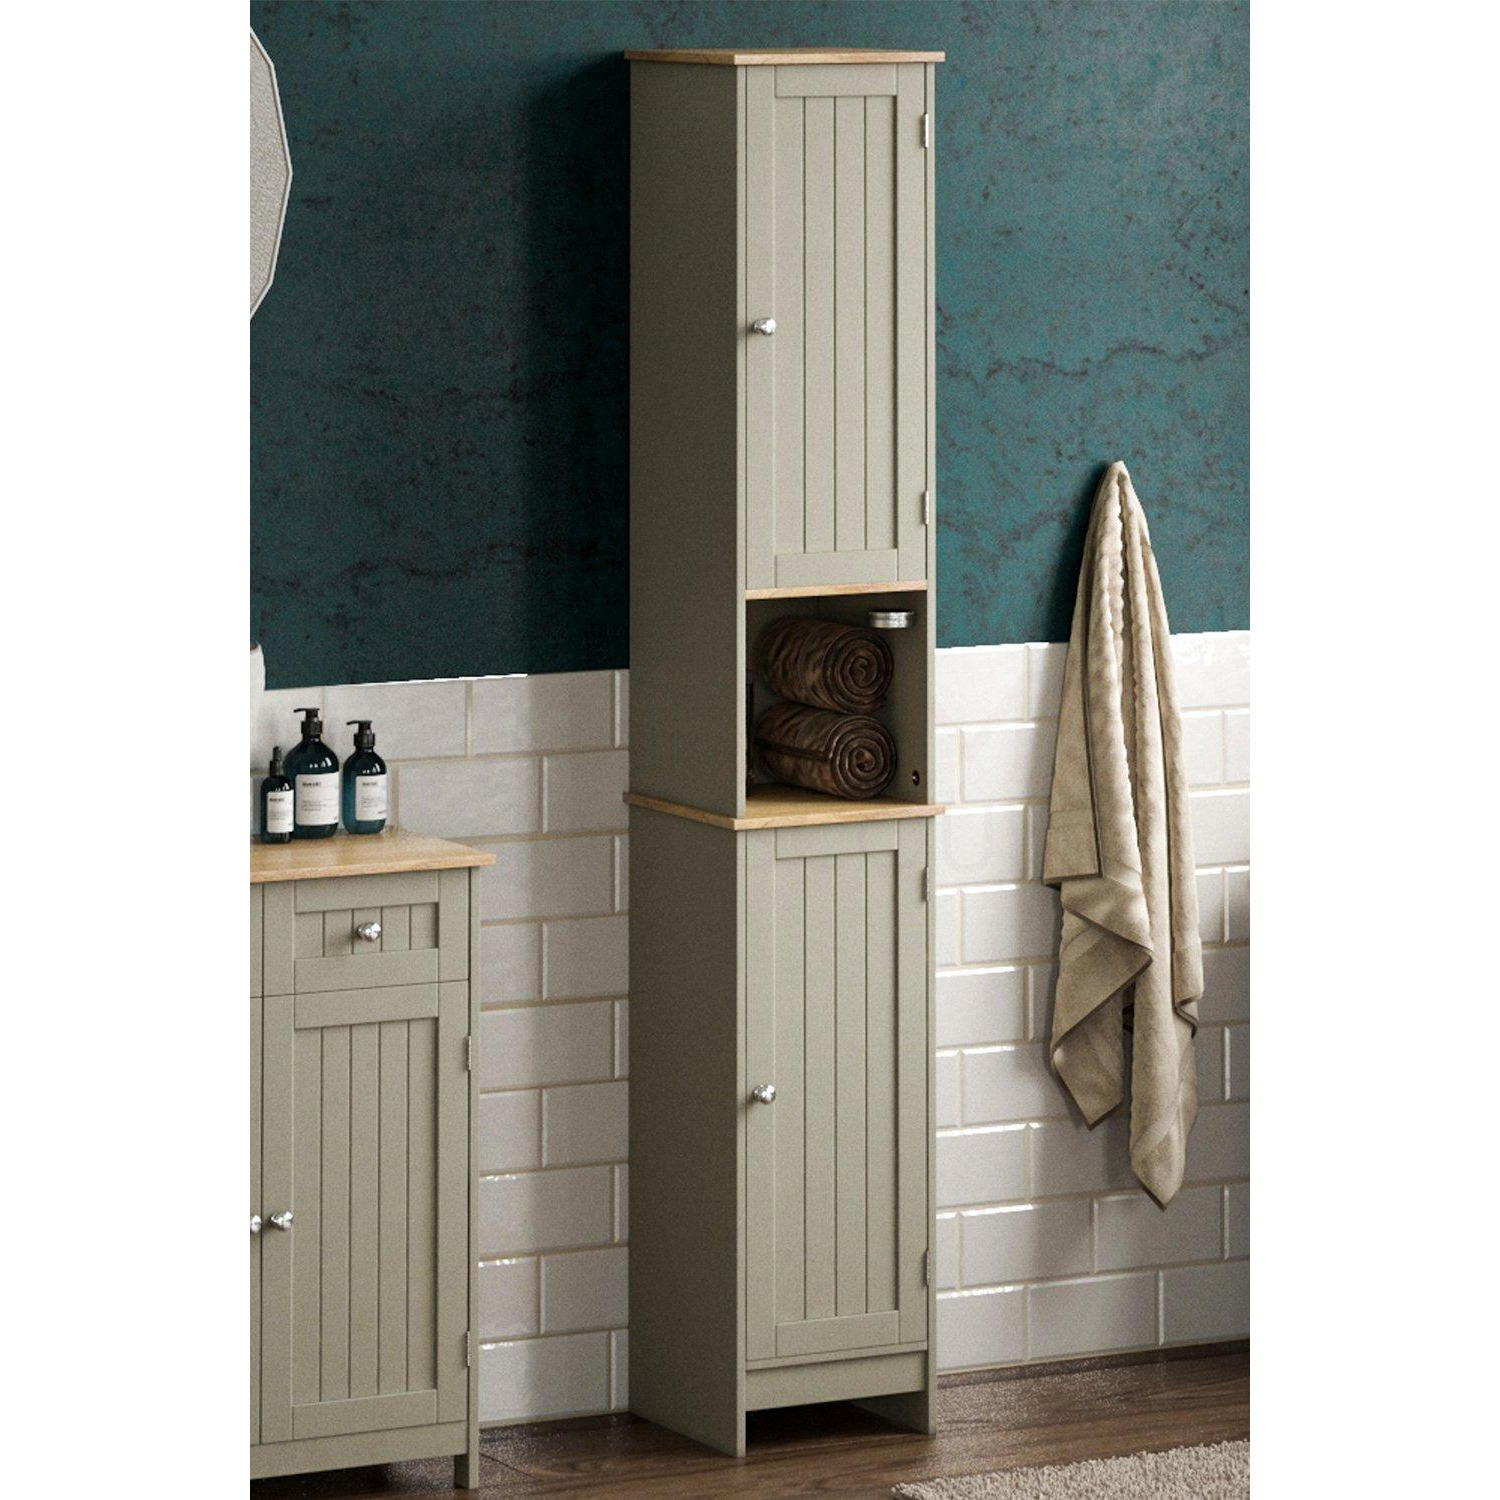 Bath Vida Priano 2 Door Tall Cabinet Cupboard Bathroom Storage 1700 x 320 x 300 mm - image 1